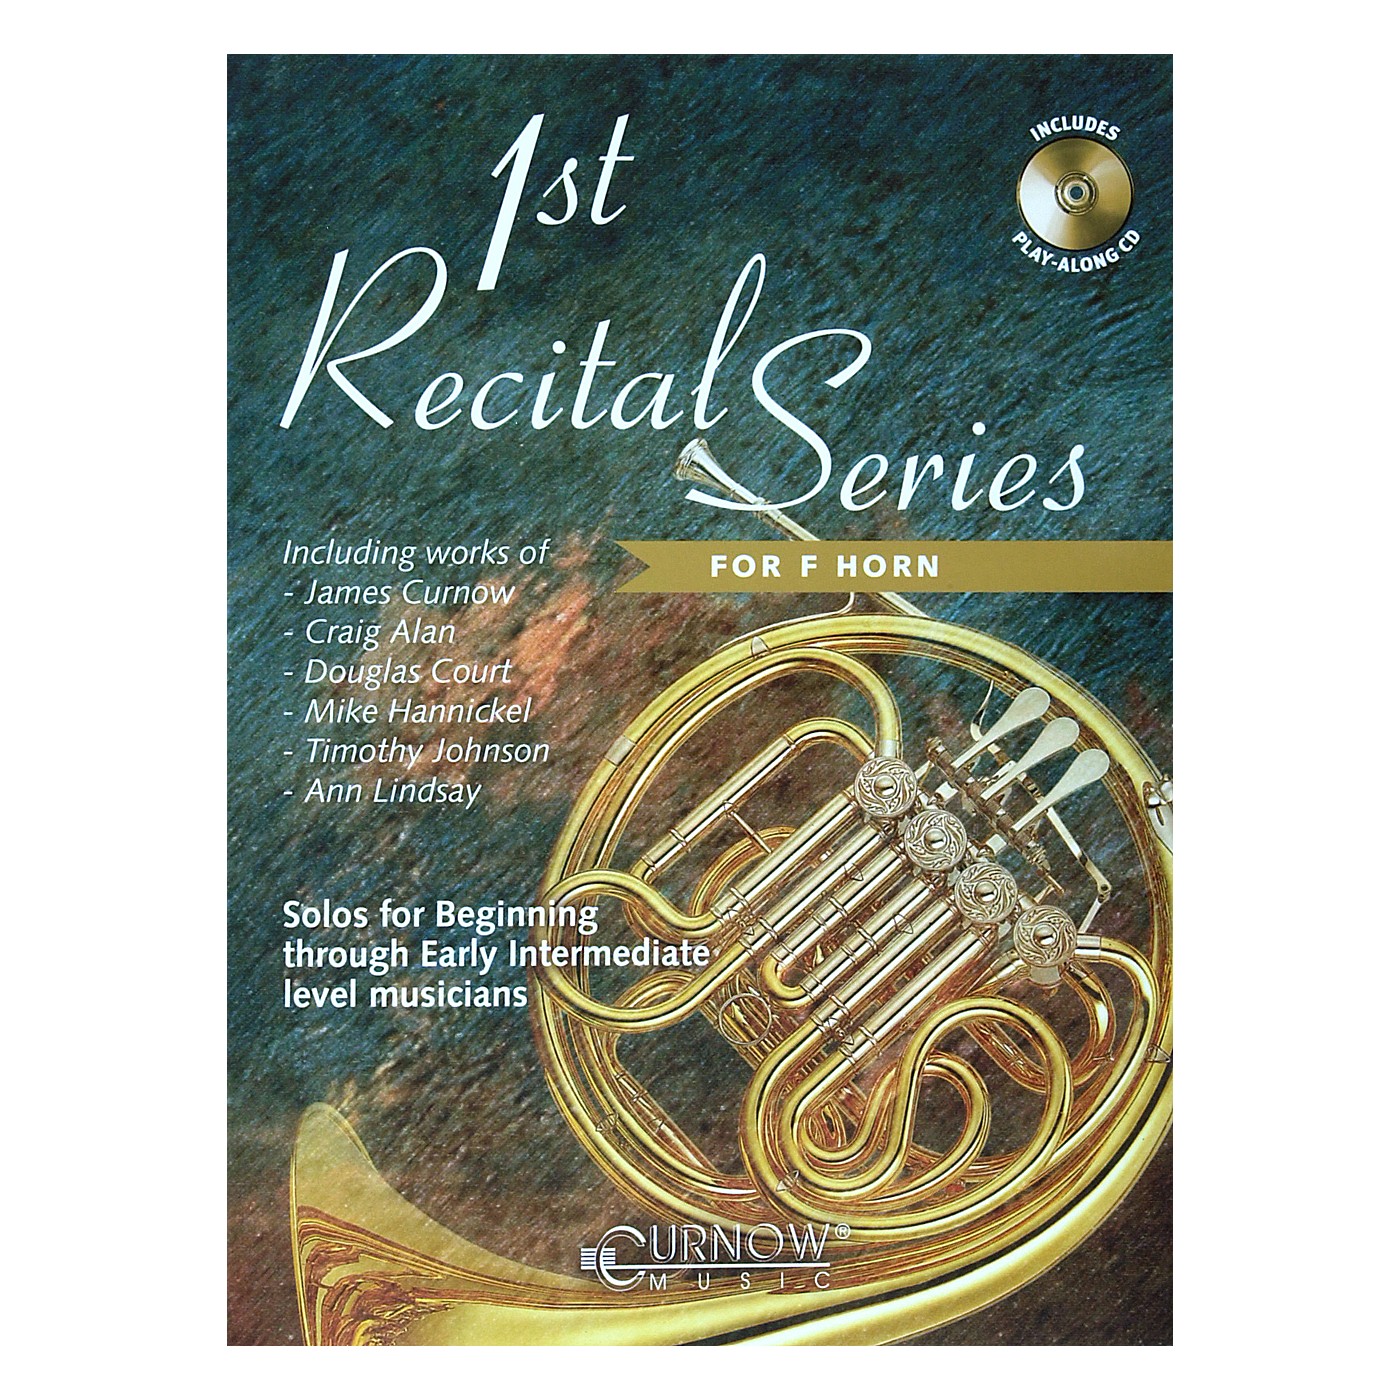 Hal Leonard Play-Along First Recital Series Book with CD thumbnail